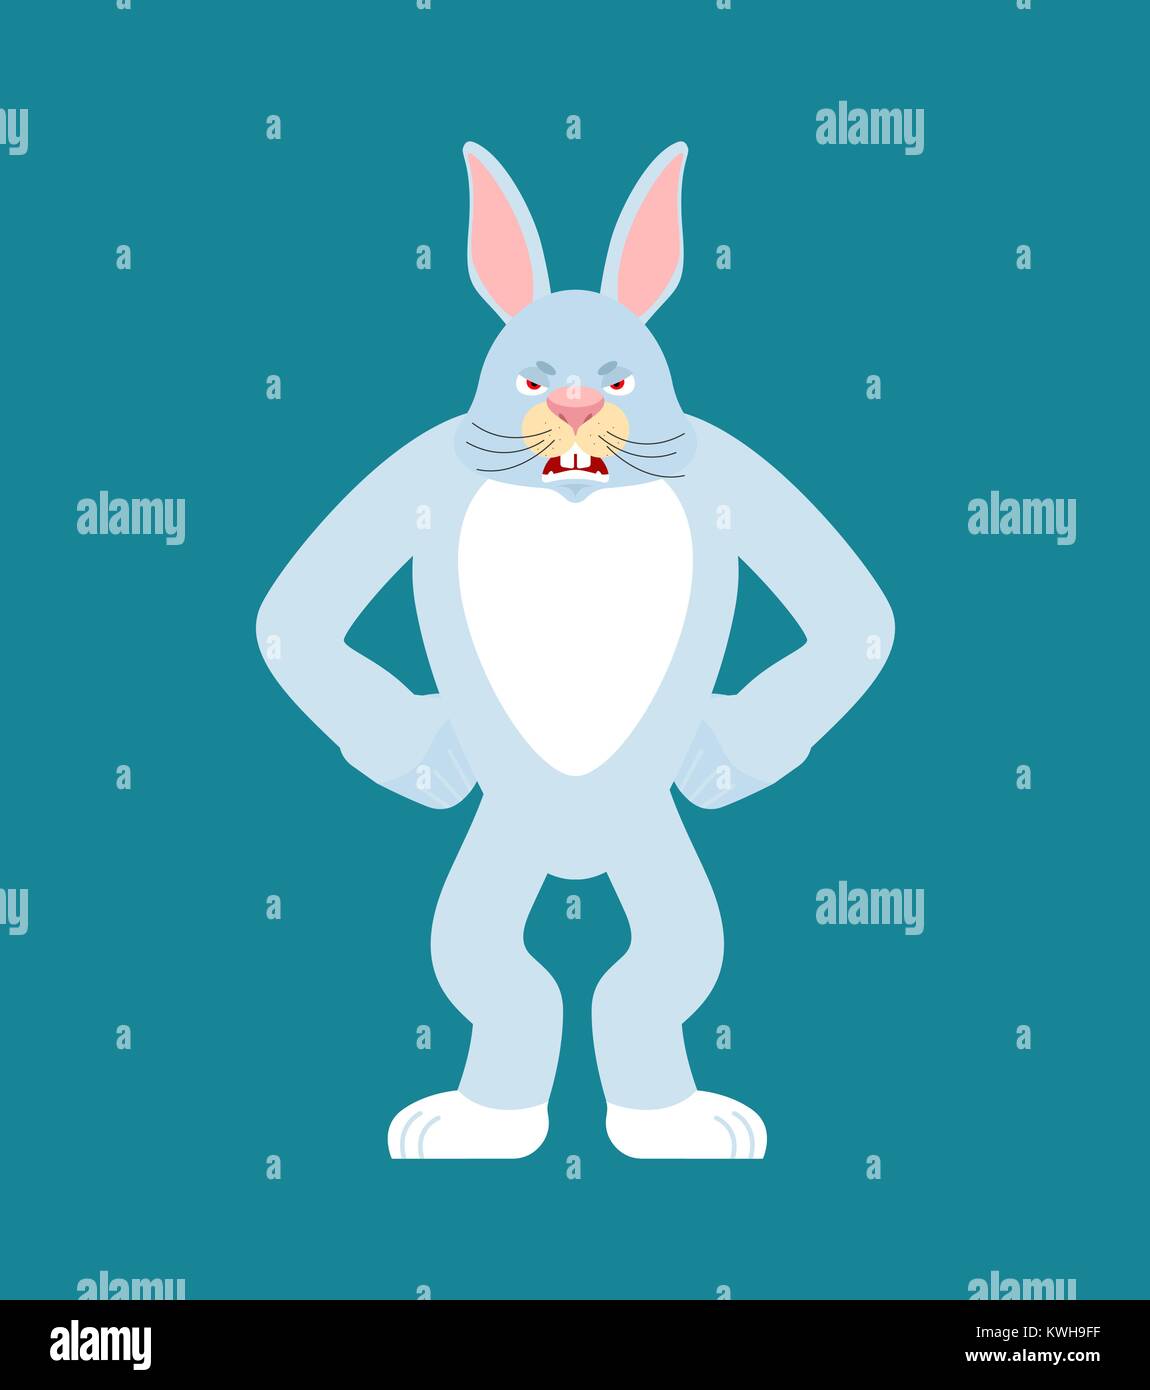 Kaninchen wütend. Hase böse Gefühle. Tier aggressiv. Vector Illustration Stock Vektor